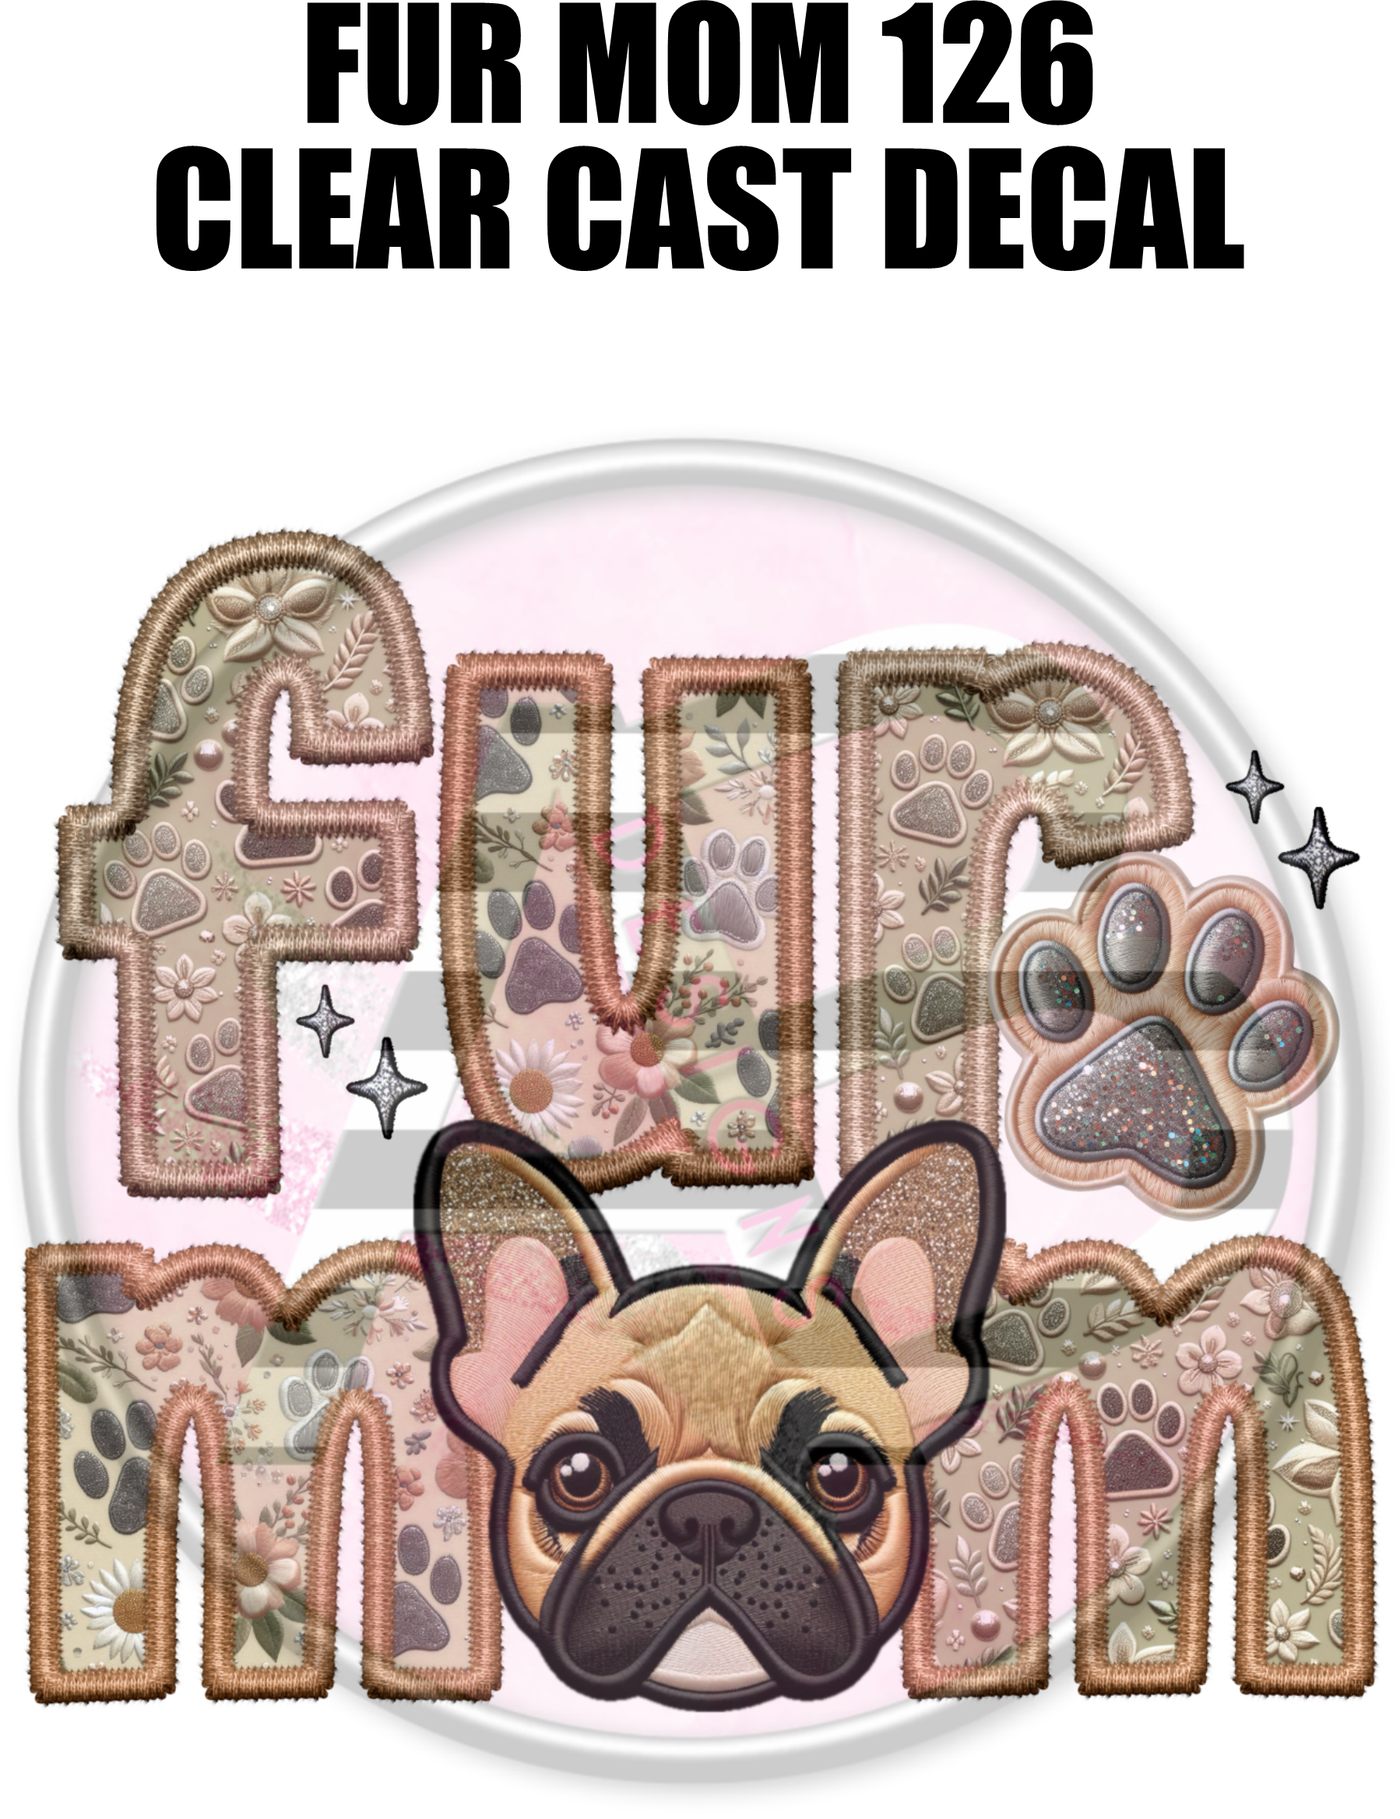 Fur Mom 126 - Clear Cast Decal